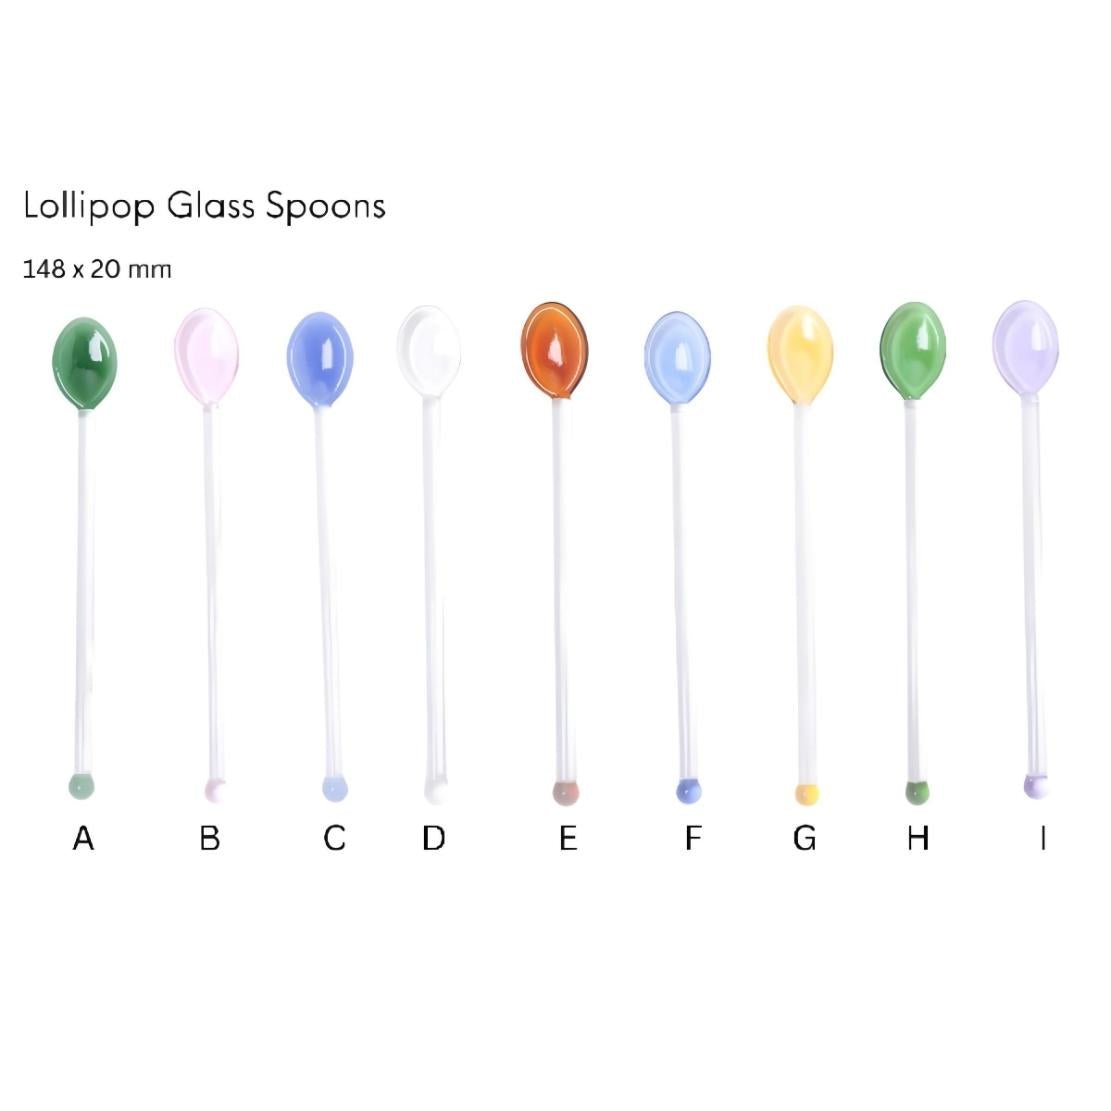 Colourful glass lollipop spoons